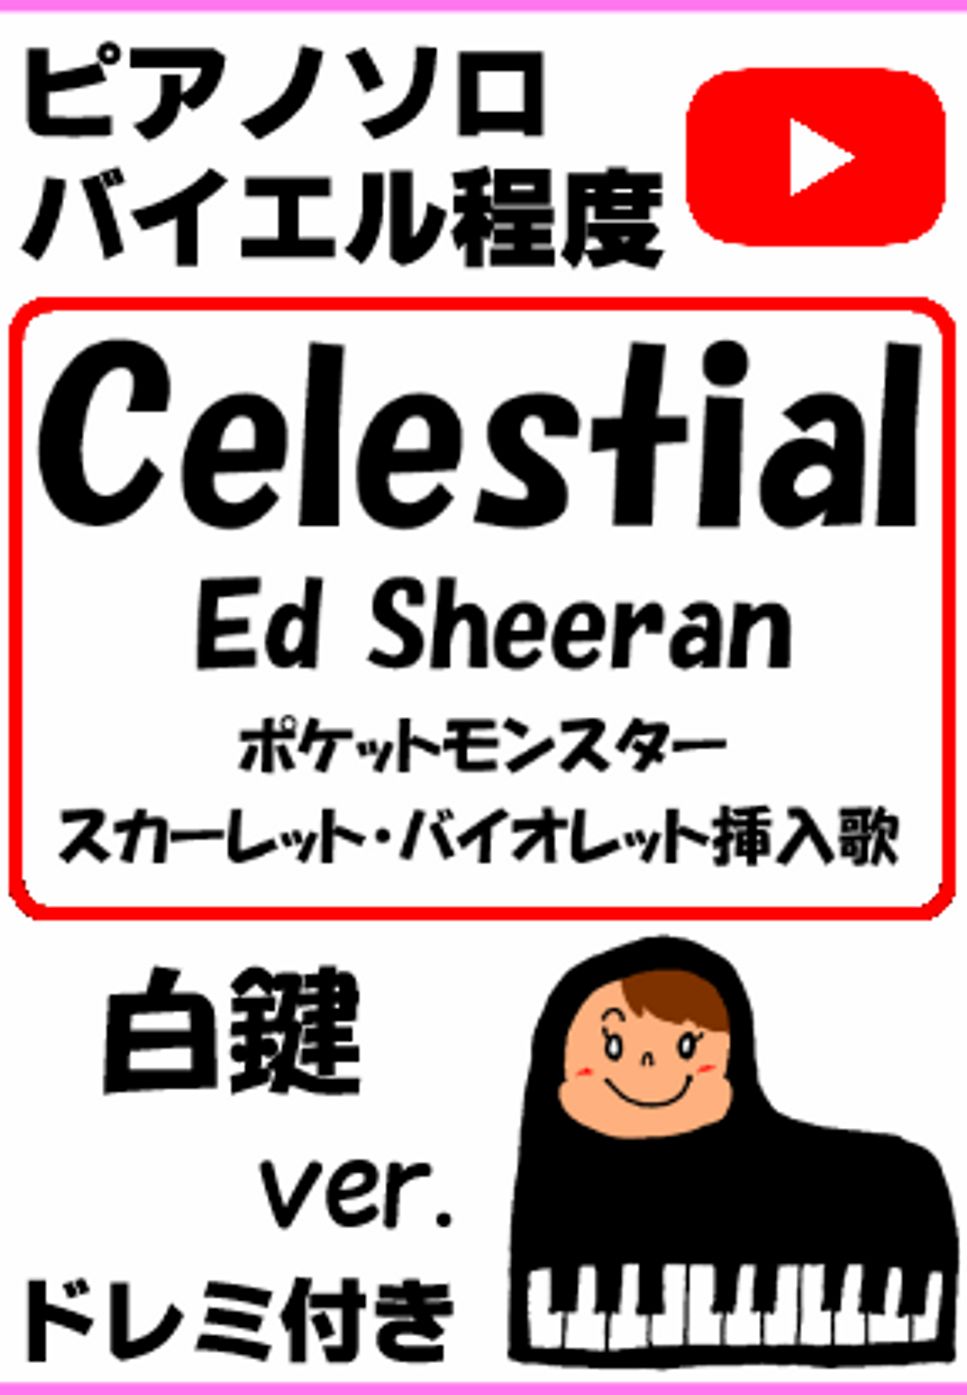 Ed Sheeran - Celestial Pokemon Ed Sheeran ポケットモンスター スカーレット・バイオレット挿入歌 白鍵ver. (親子連弾/連弾/簡単ピアノ/白鍵ピアノ/演奏会/ドレミ付/楽譜/鍵盤/piano/耳コピ) by ラボのピアノ